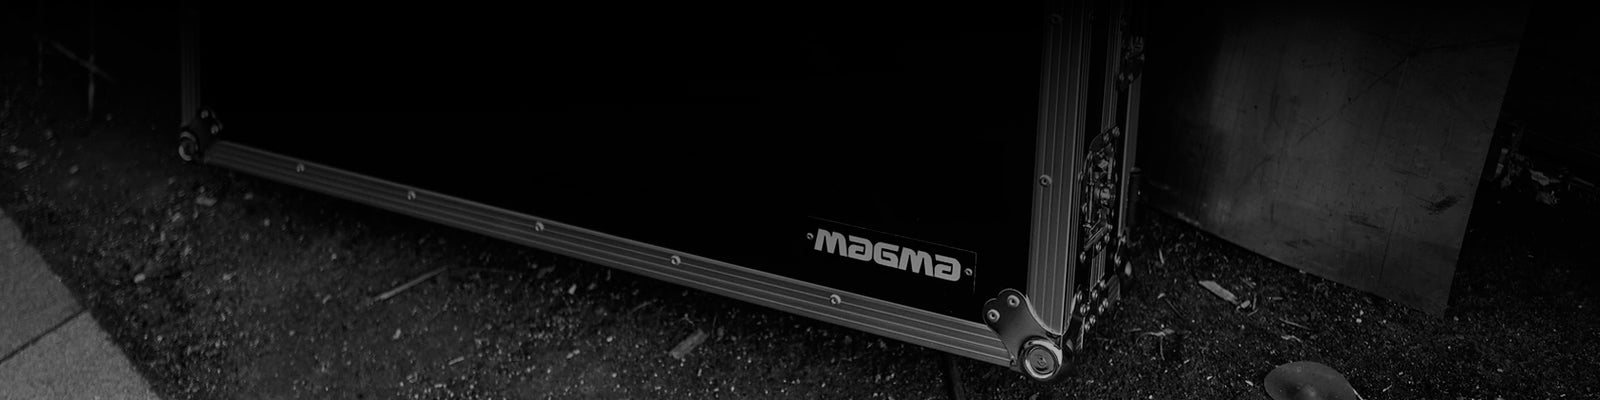 Magma dj controller case outdoors